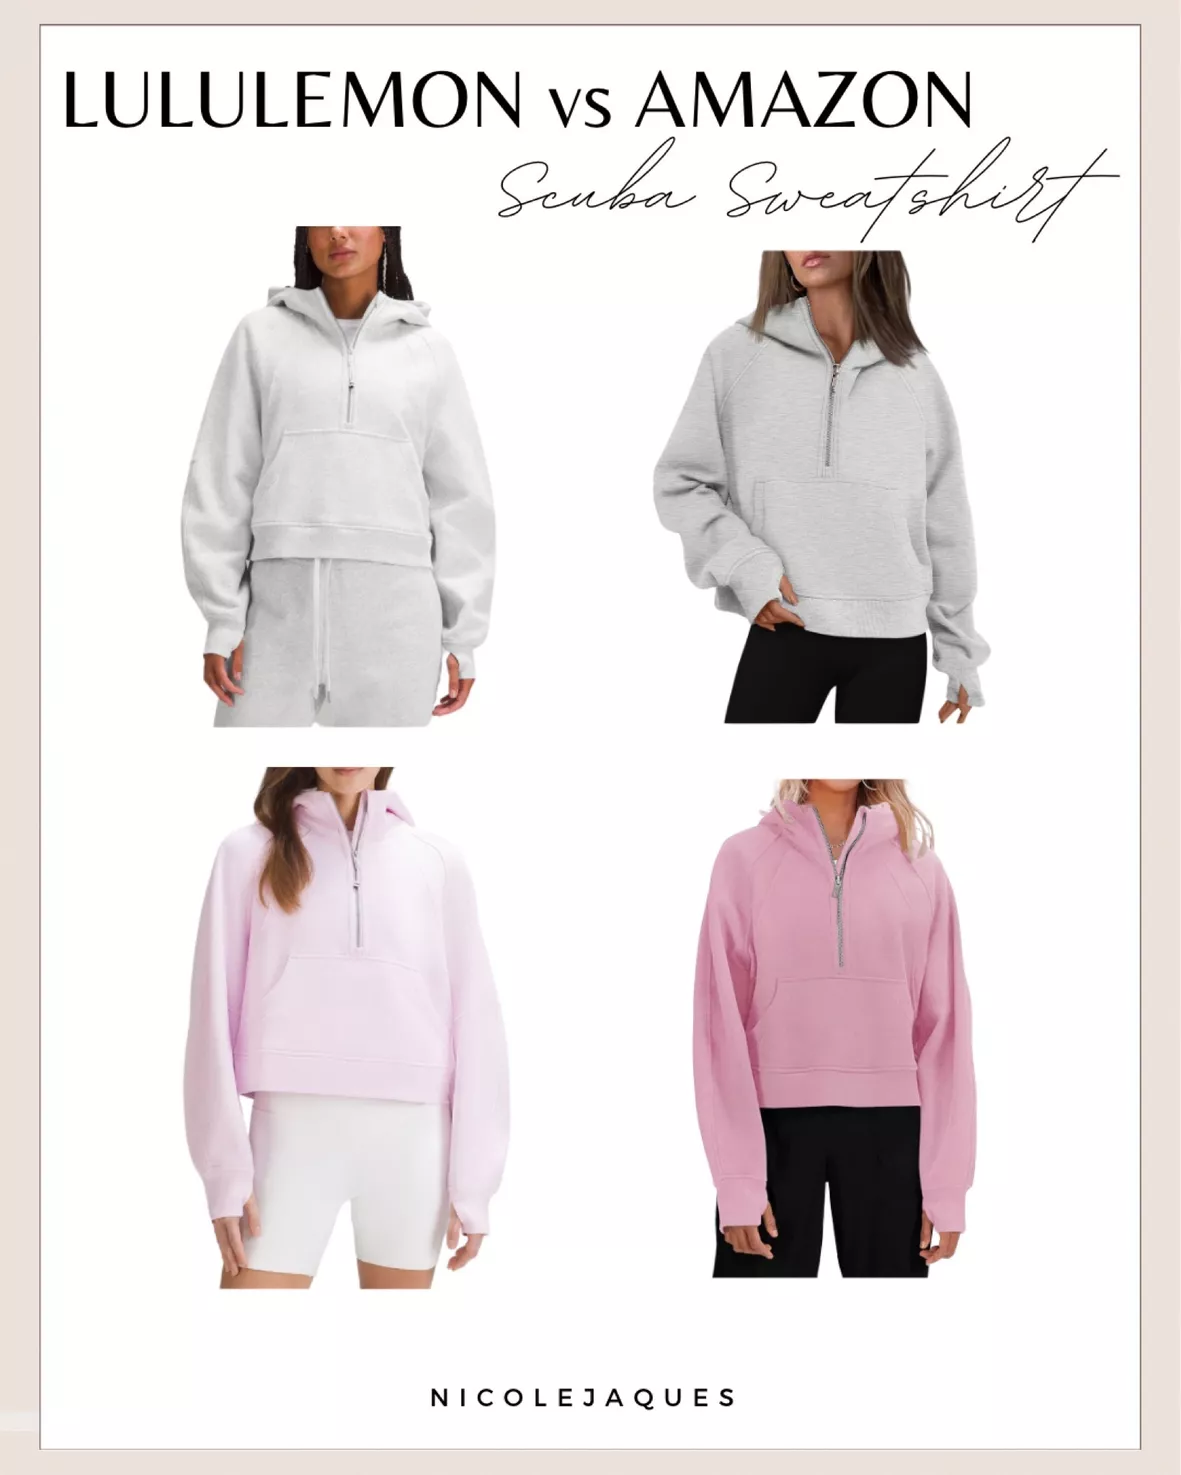 Scuba Oversized Half-Zip Hoodie, Women's Hoodies & Sweatshirts, lululemon